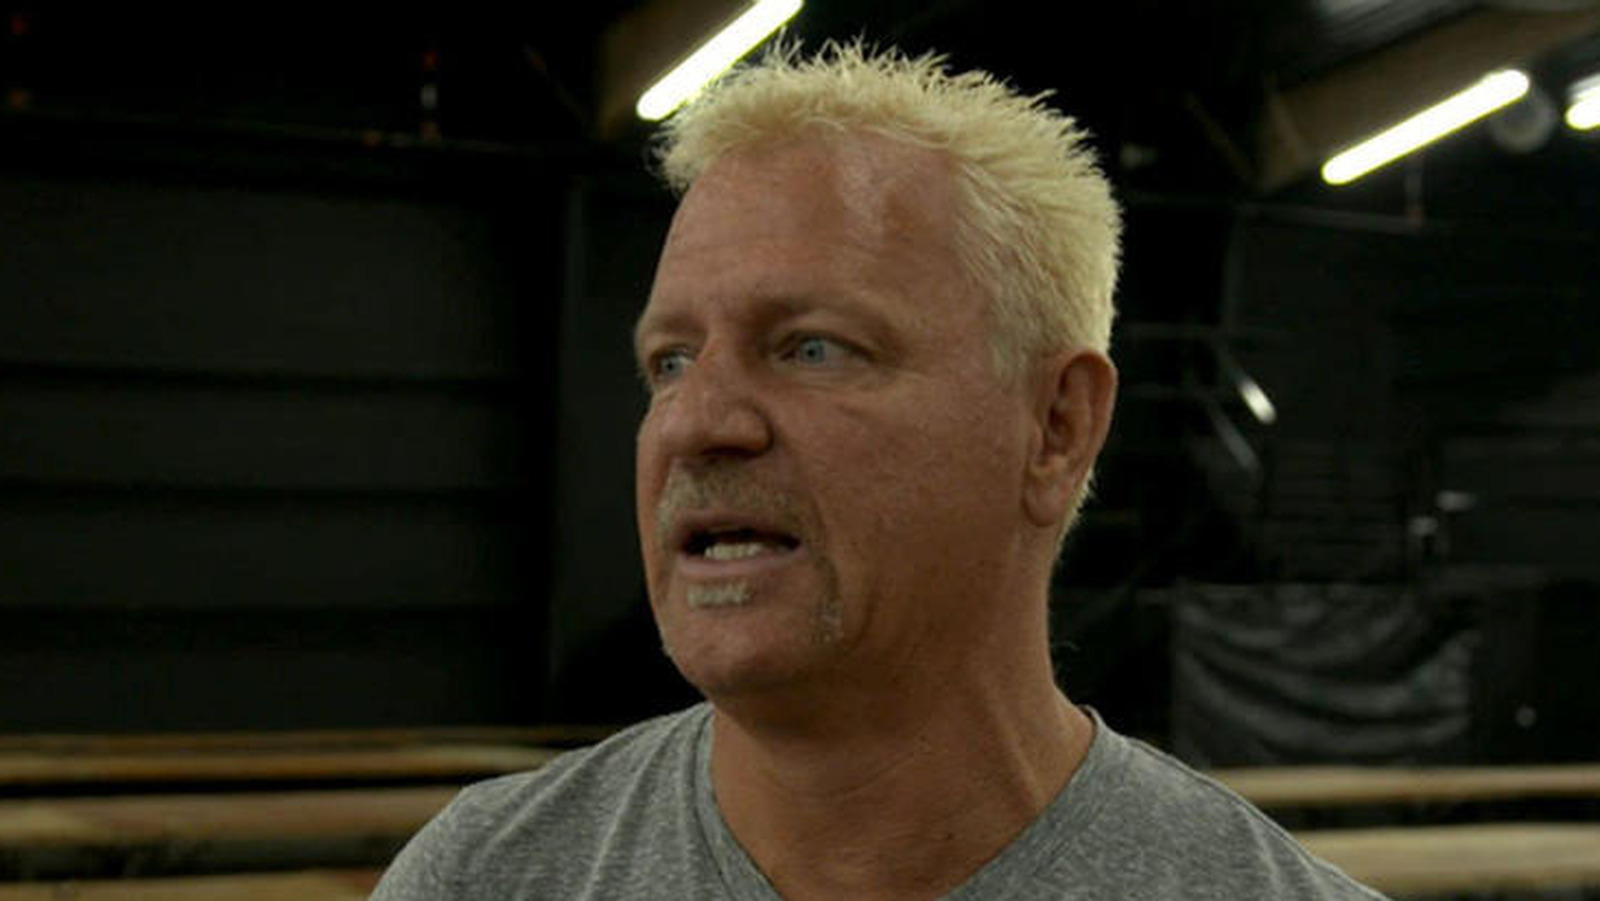 AEW's Jeff Jarrett Reflects On The Death Of His Father, Wrestling Legend Jerry Jarrett